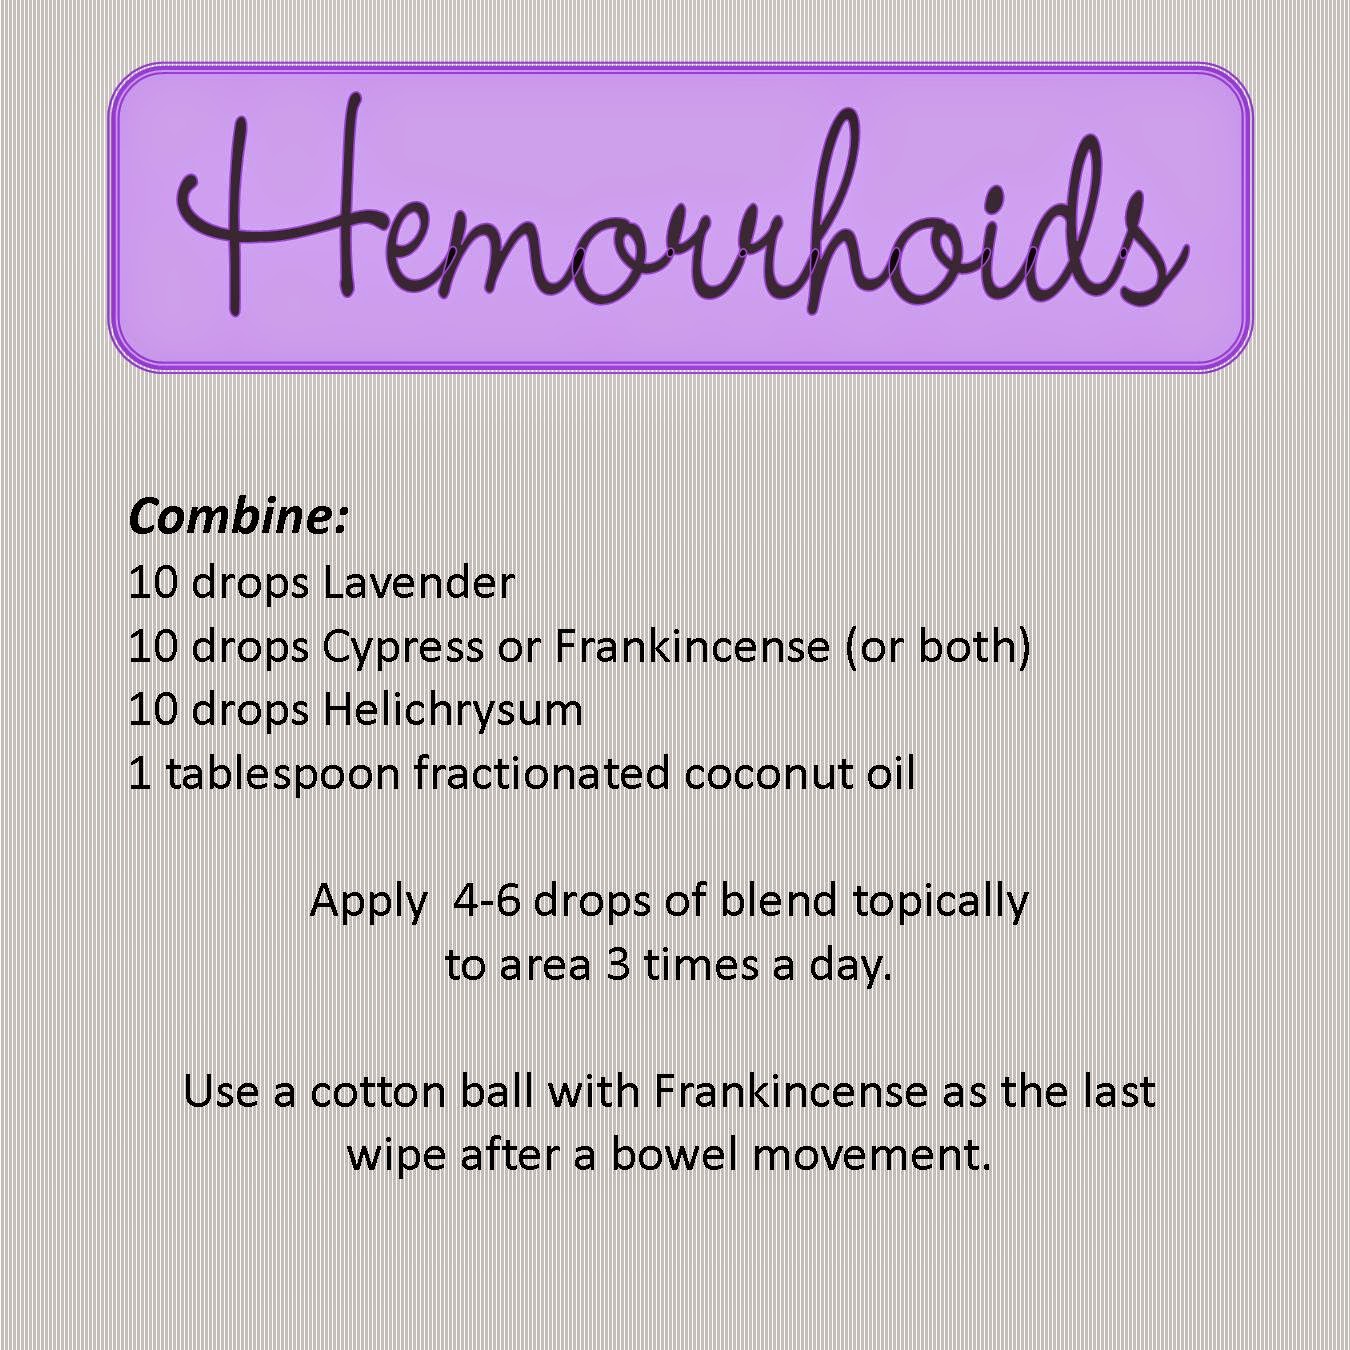 Hemorrhoids being pregnant